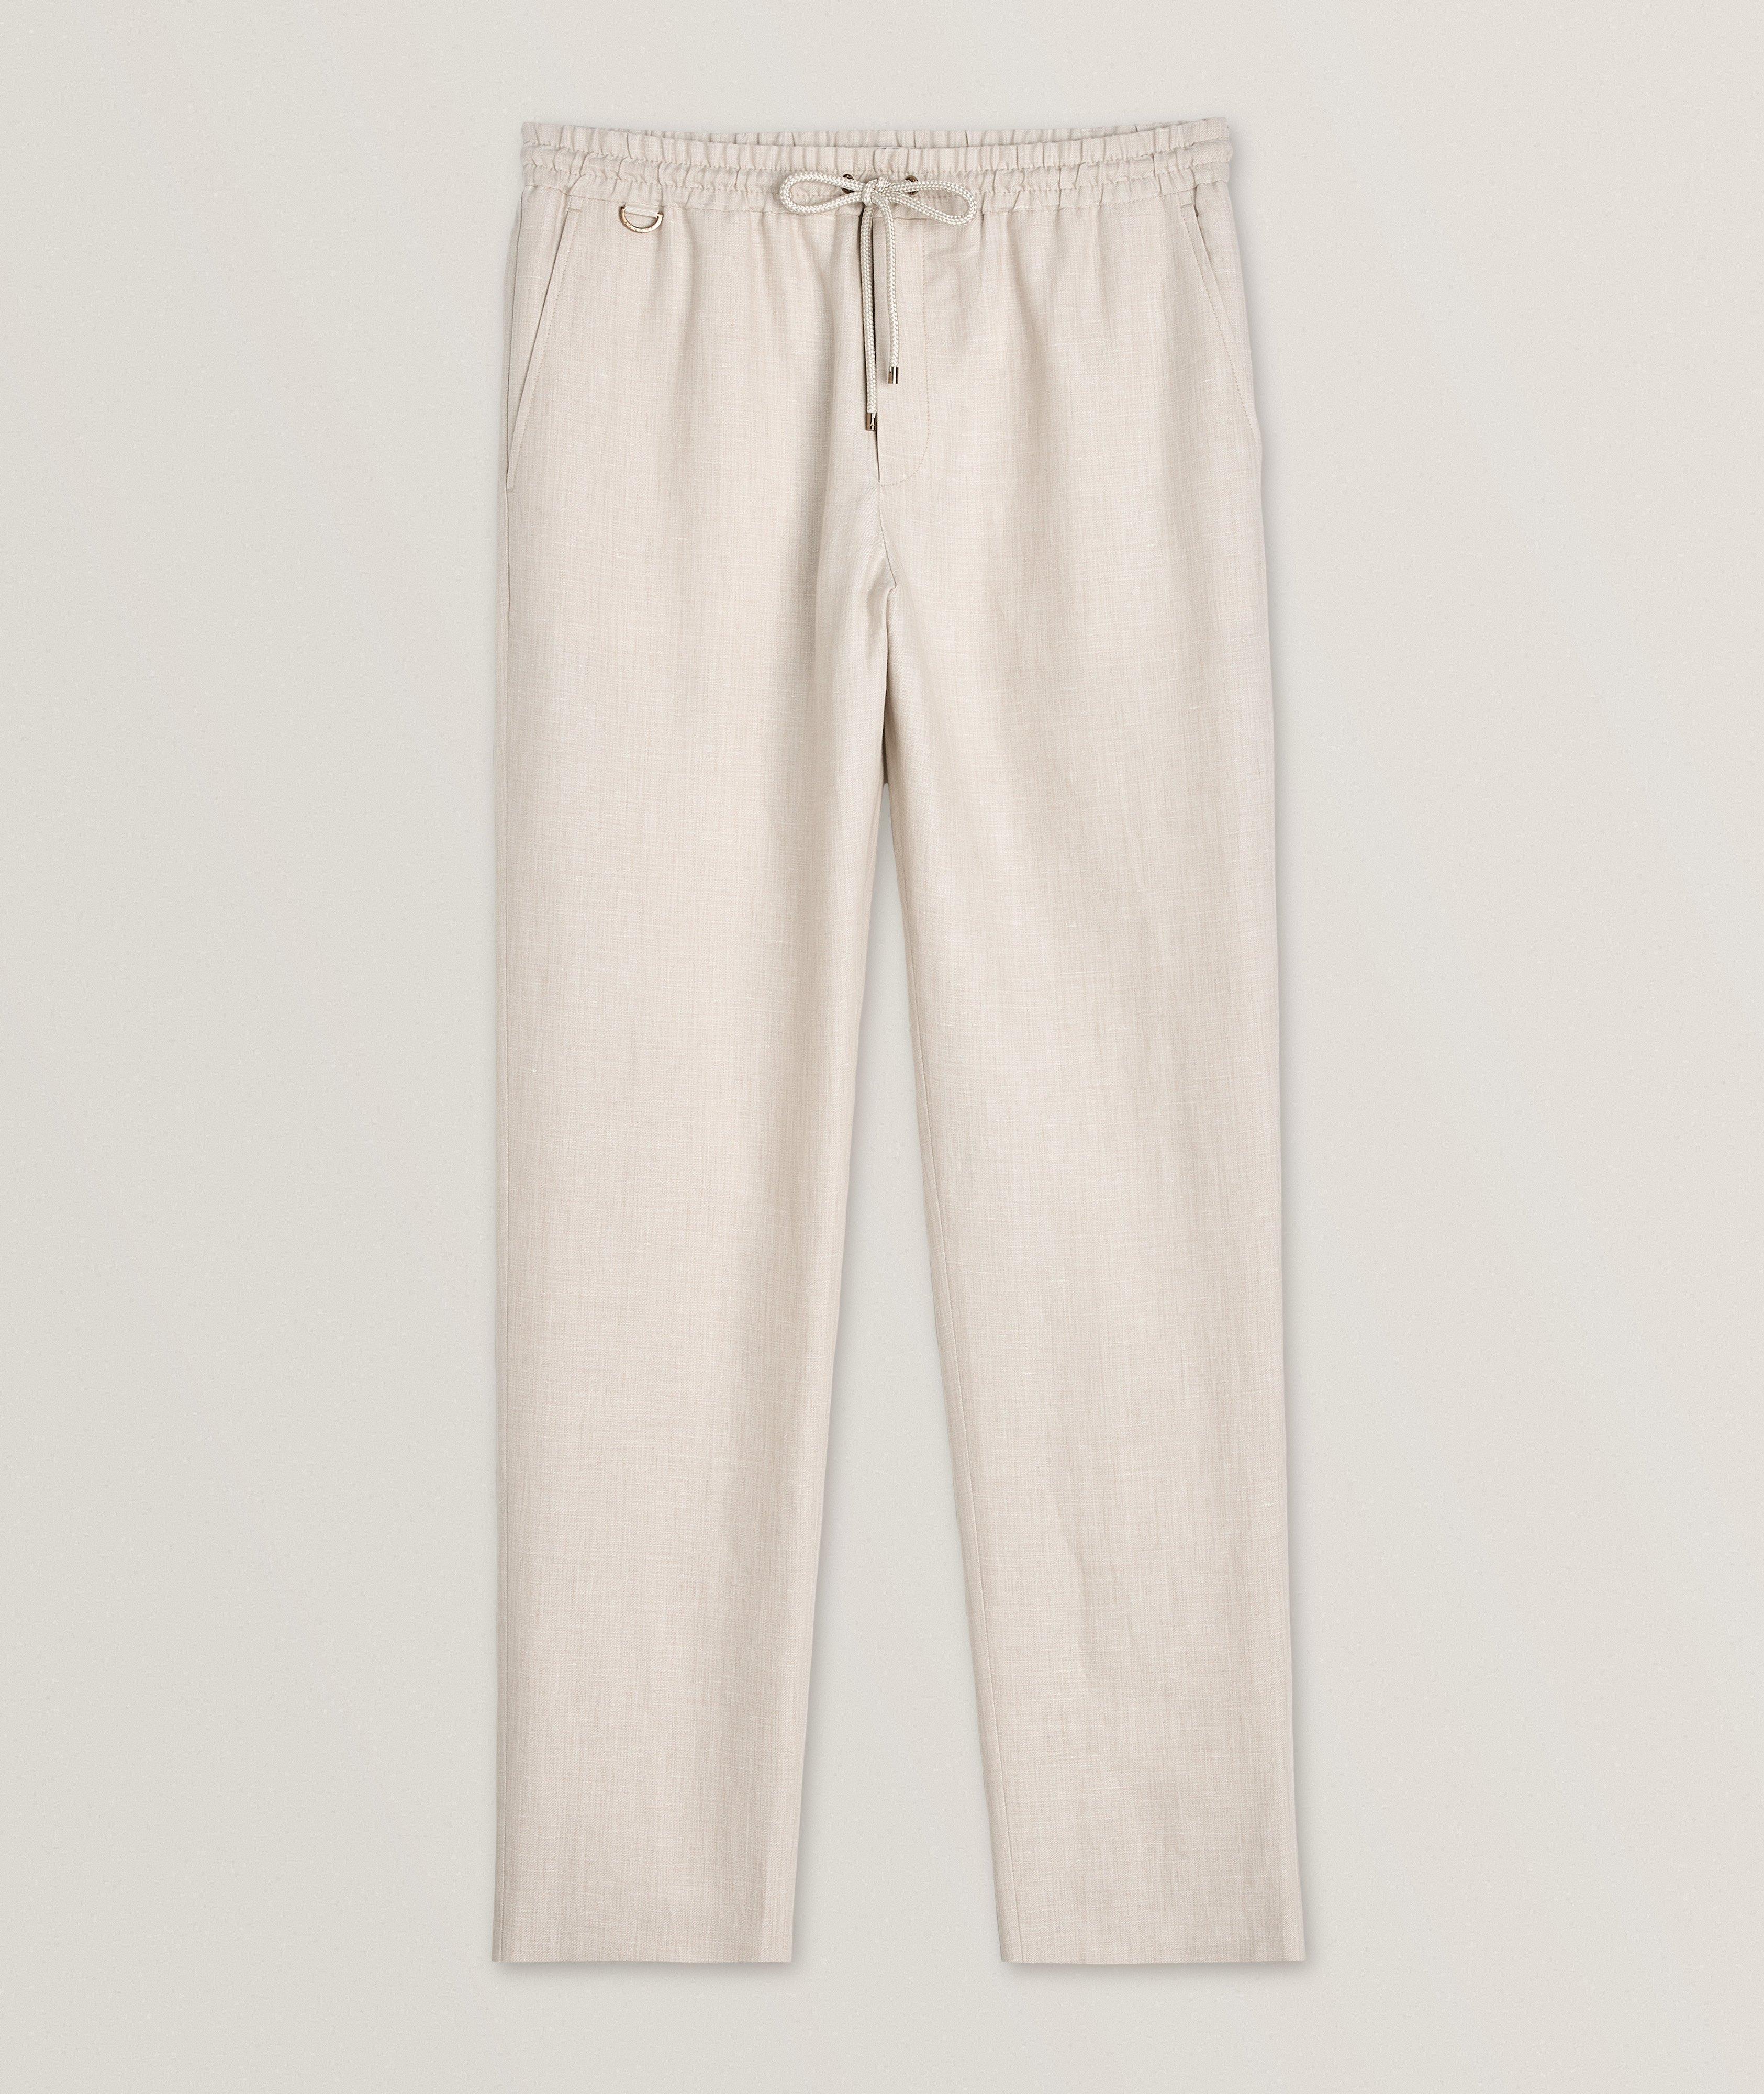 Linen Drawstring Pants image 0